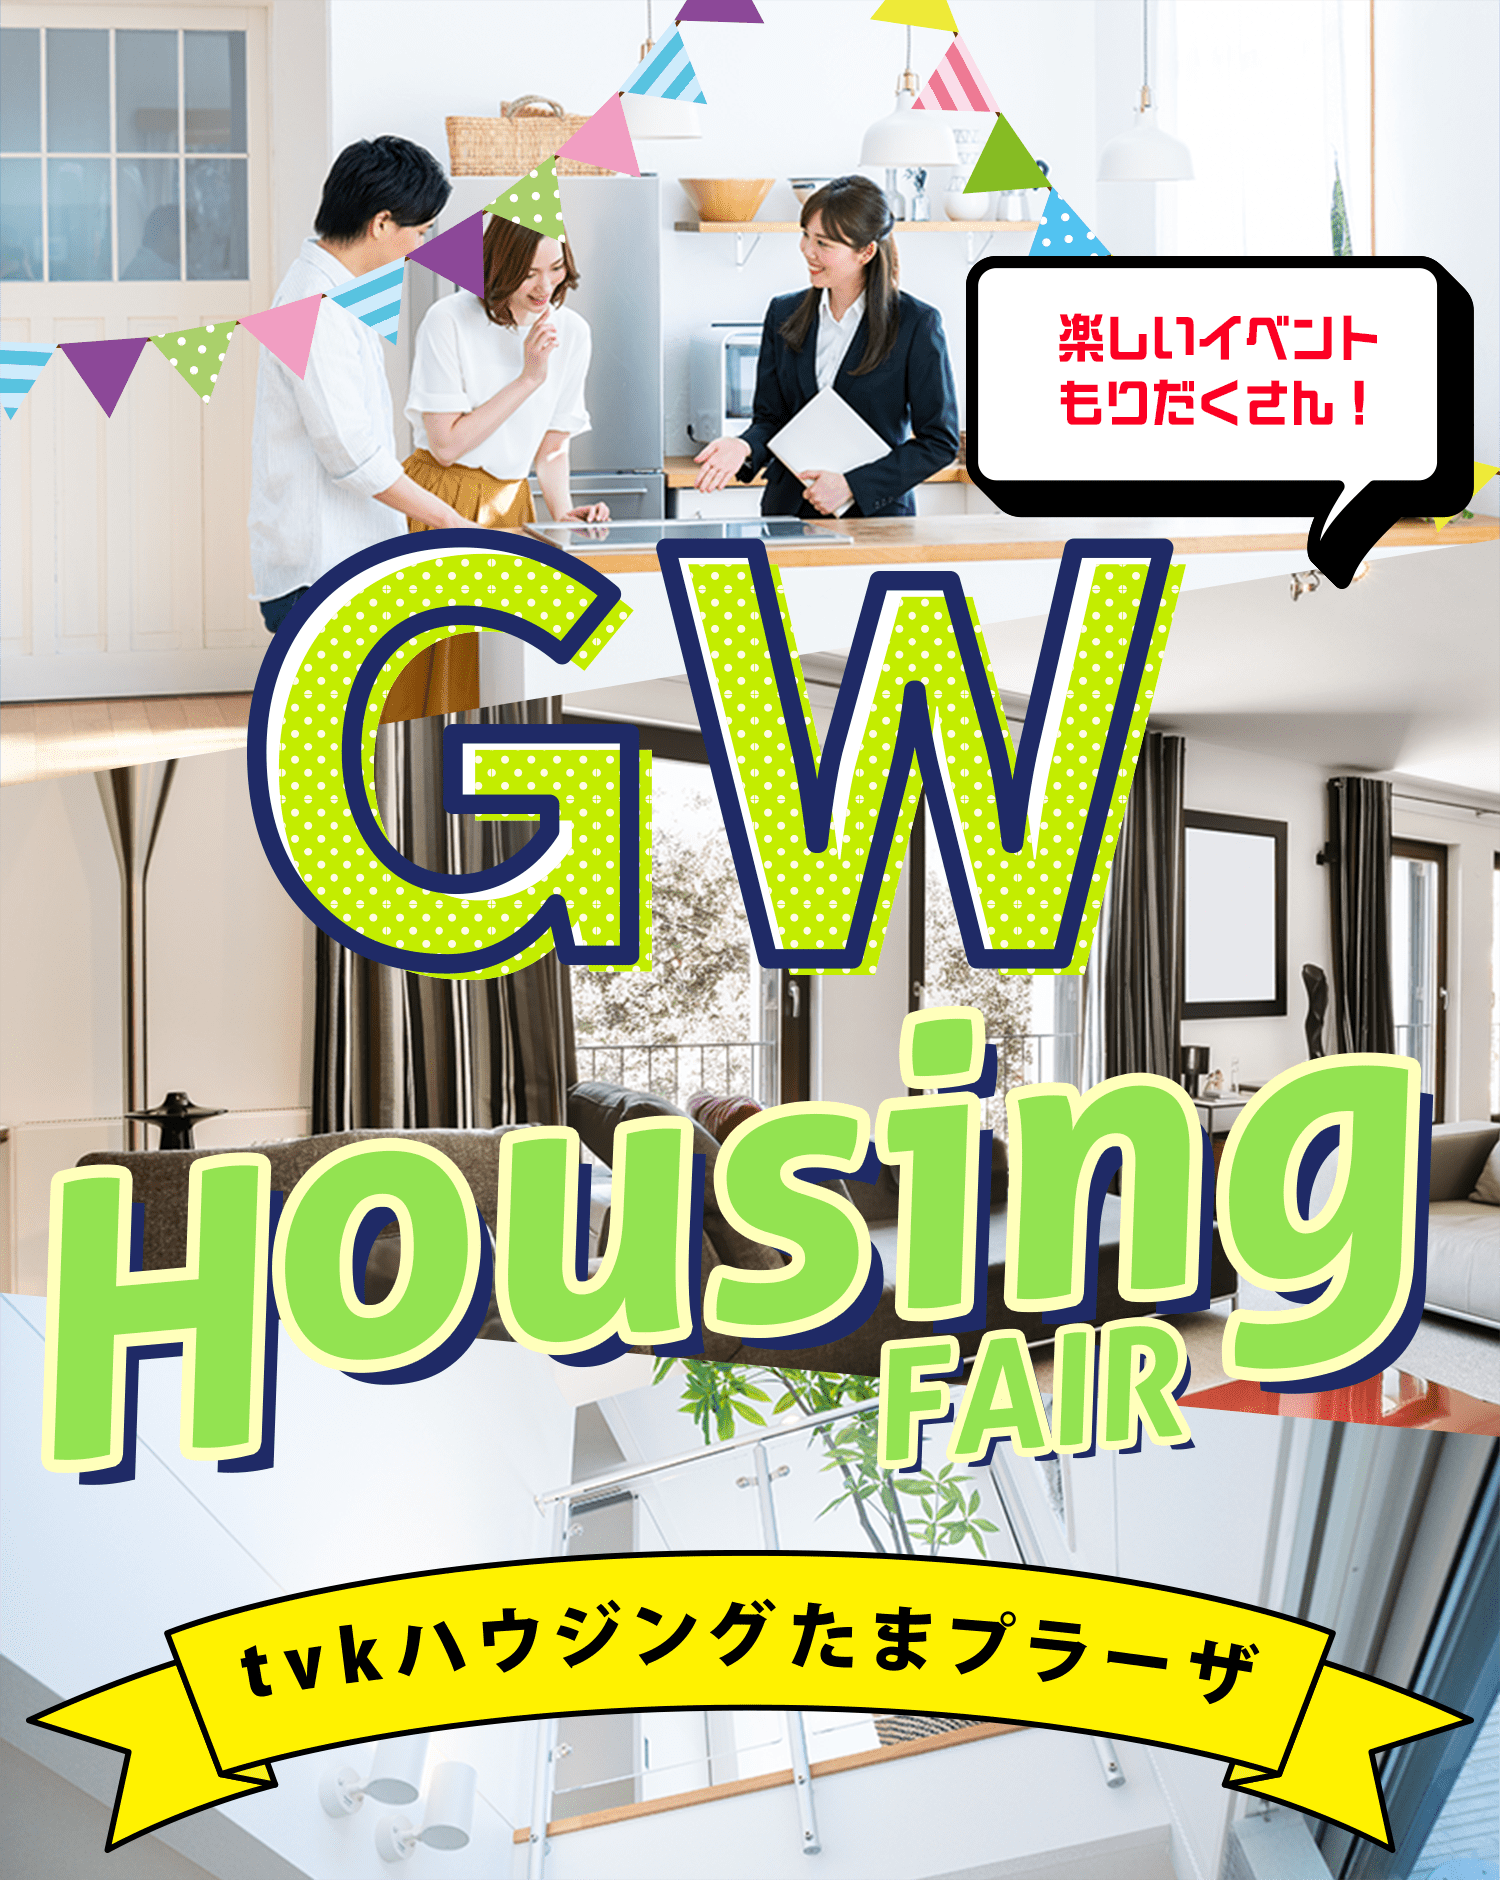 GW Housing Fair tvkハウジングたまプラーザ